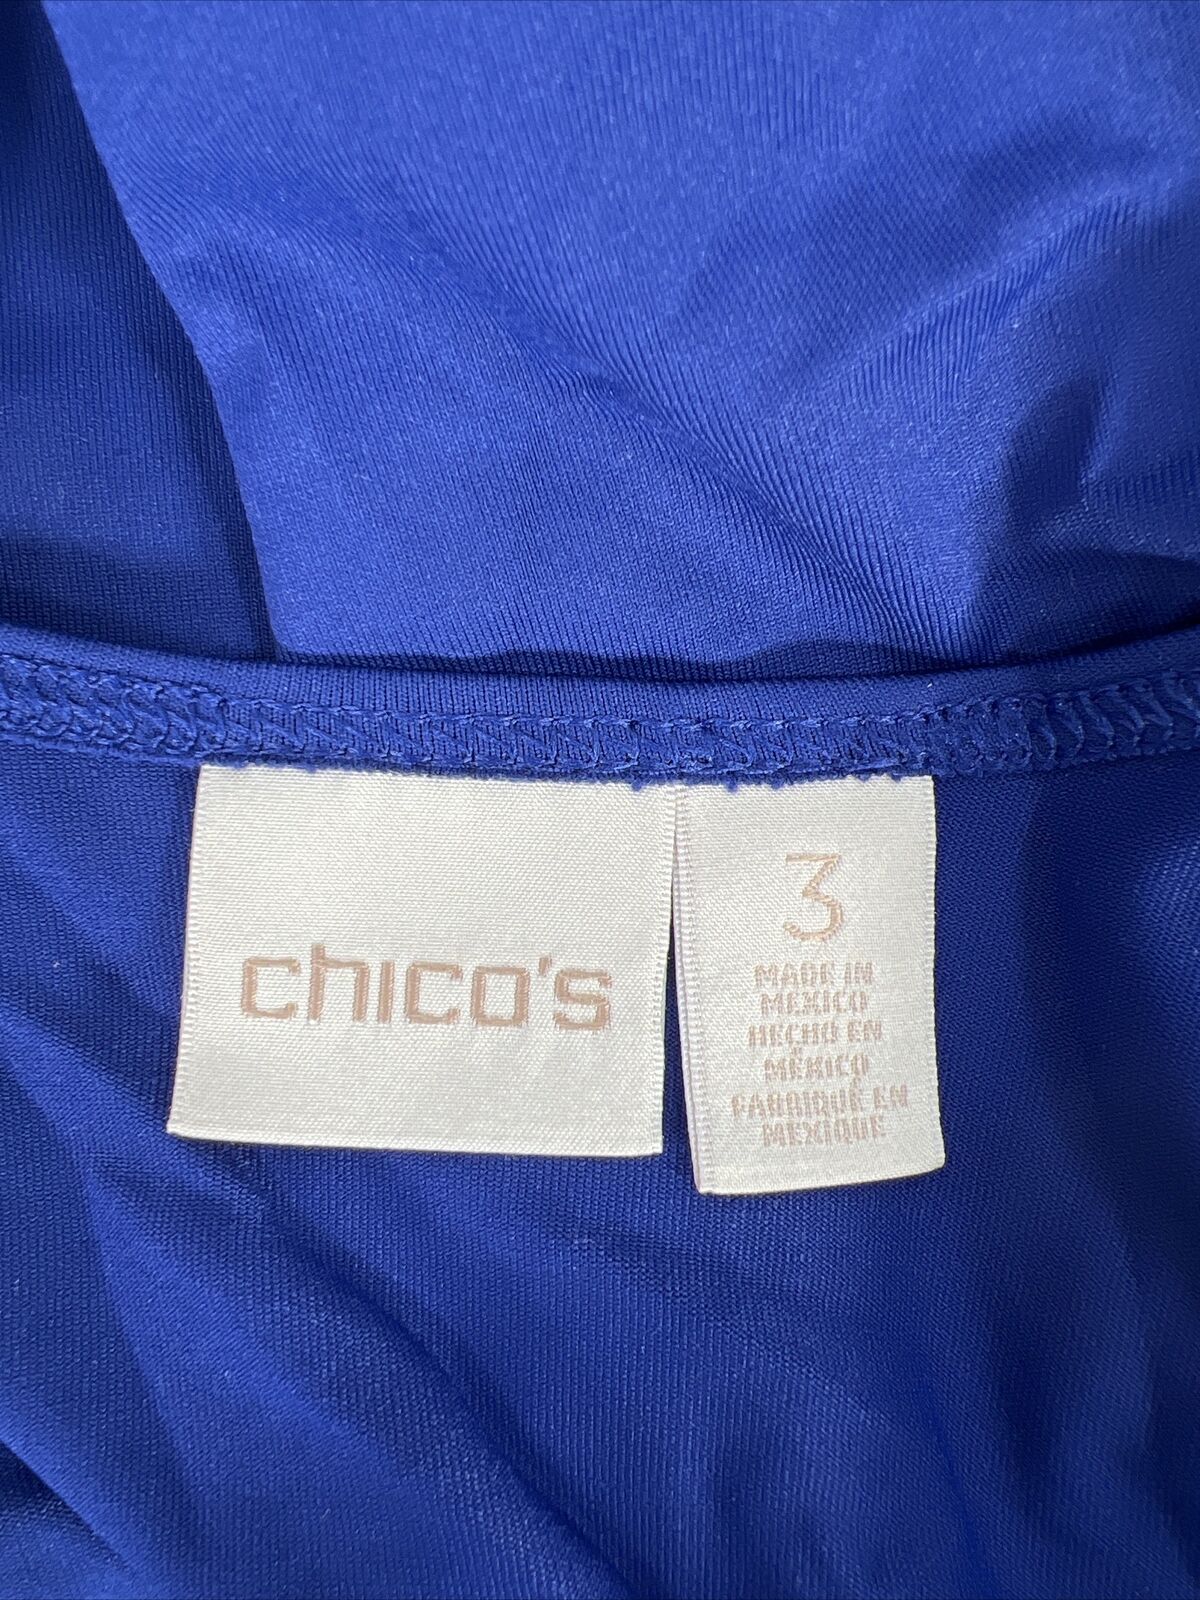 Chico's Women's Blue Cami Nylon Sleeveless Tank Top - 3/ US XL